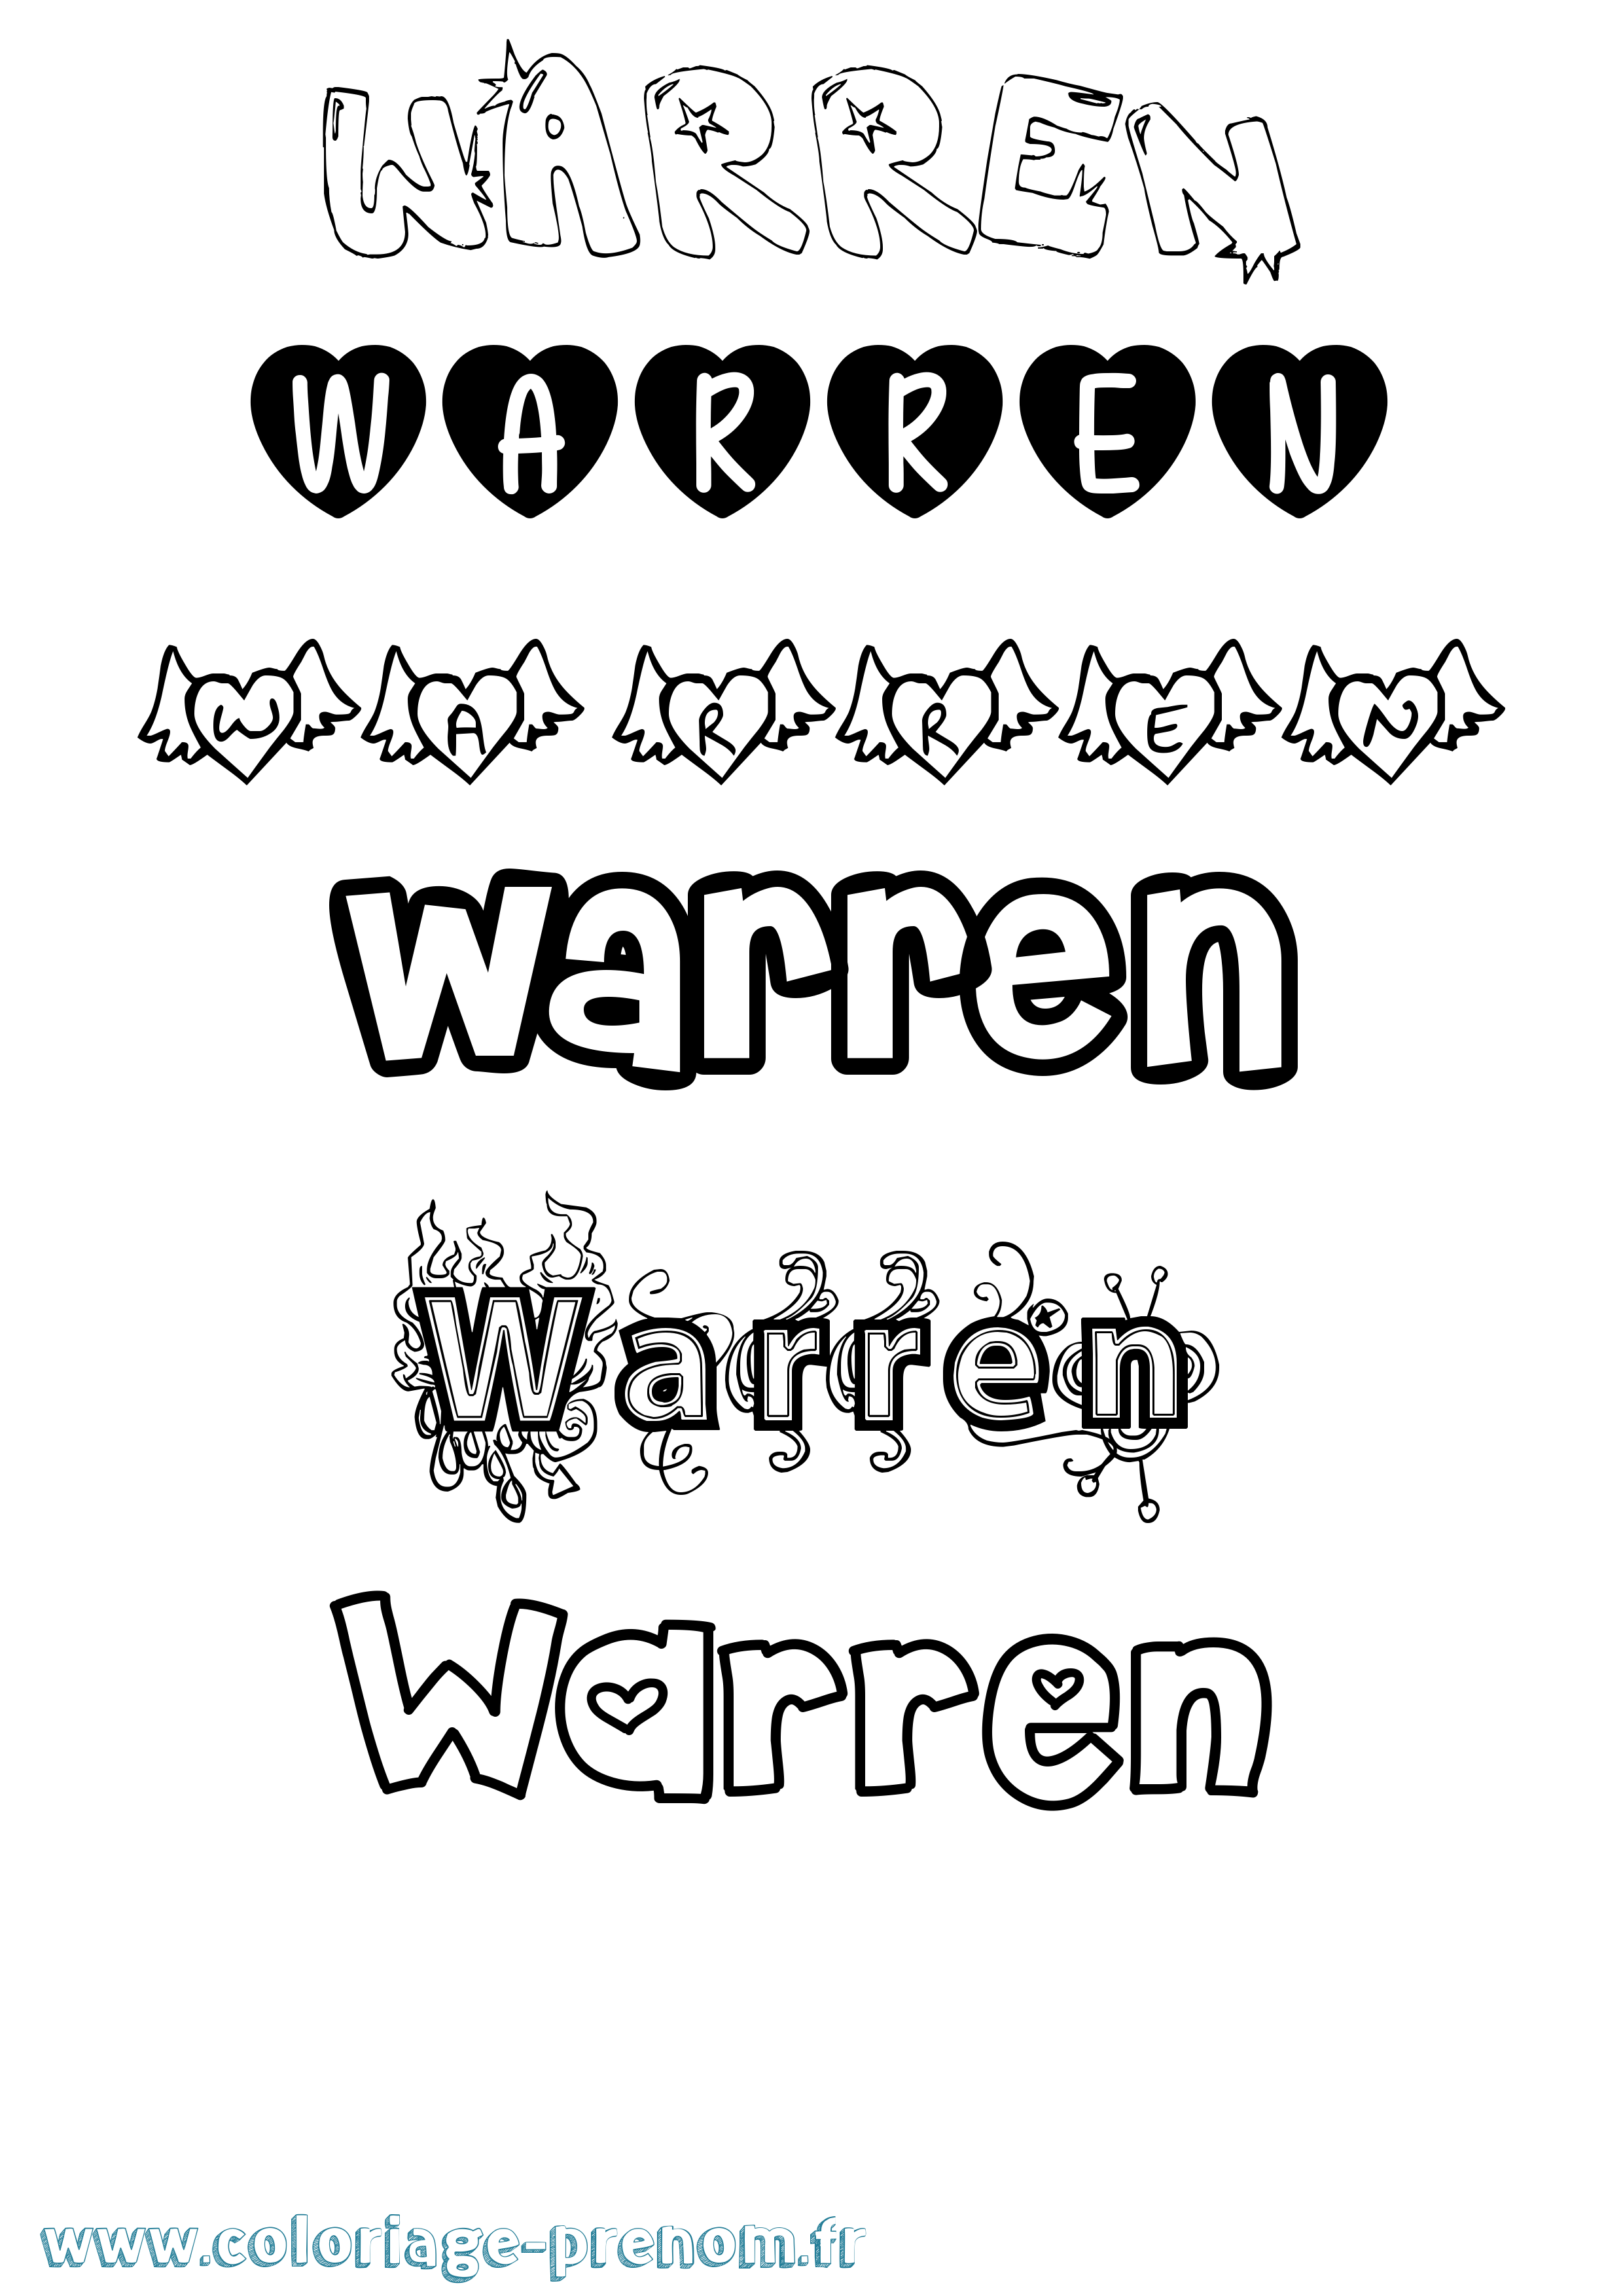 Coloriage prénom Warren